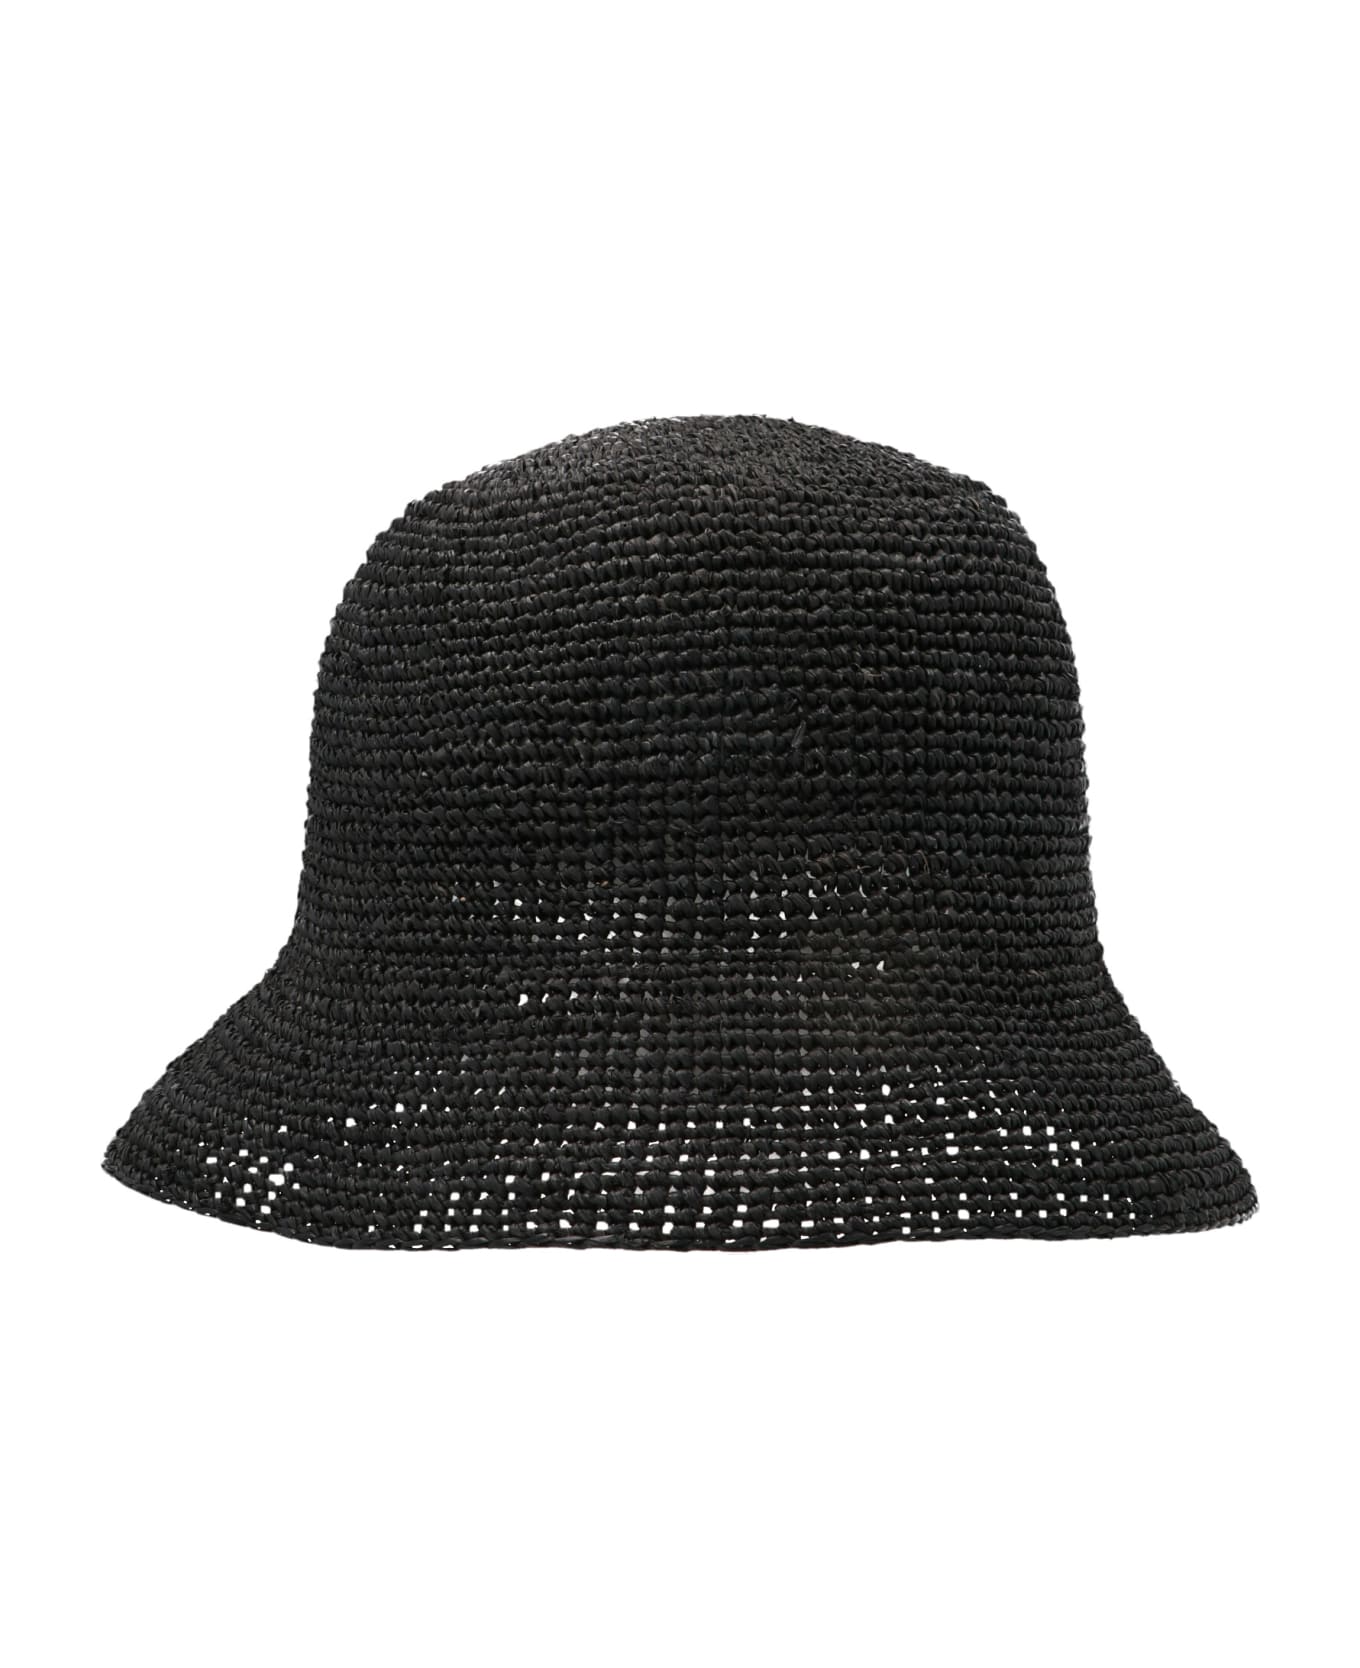 Ibeliv Andao Bucket Hat - Black   帽子